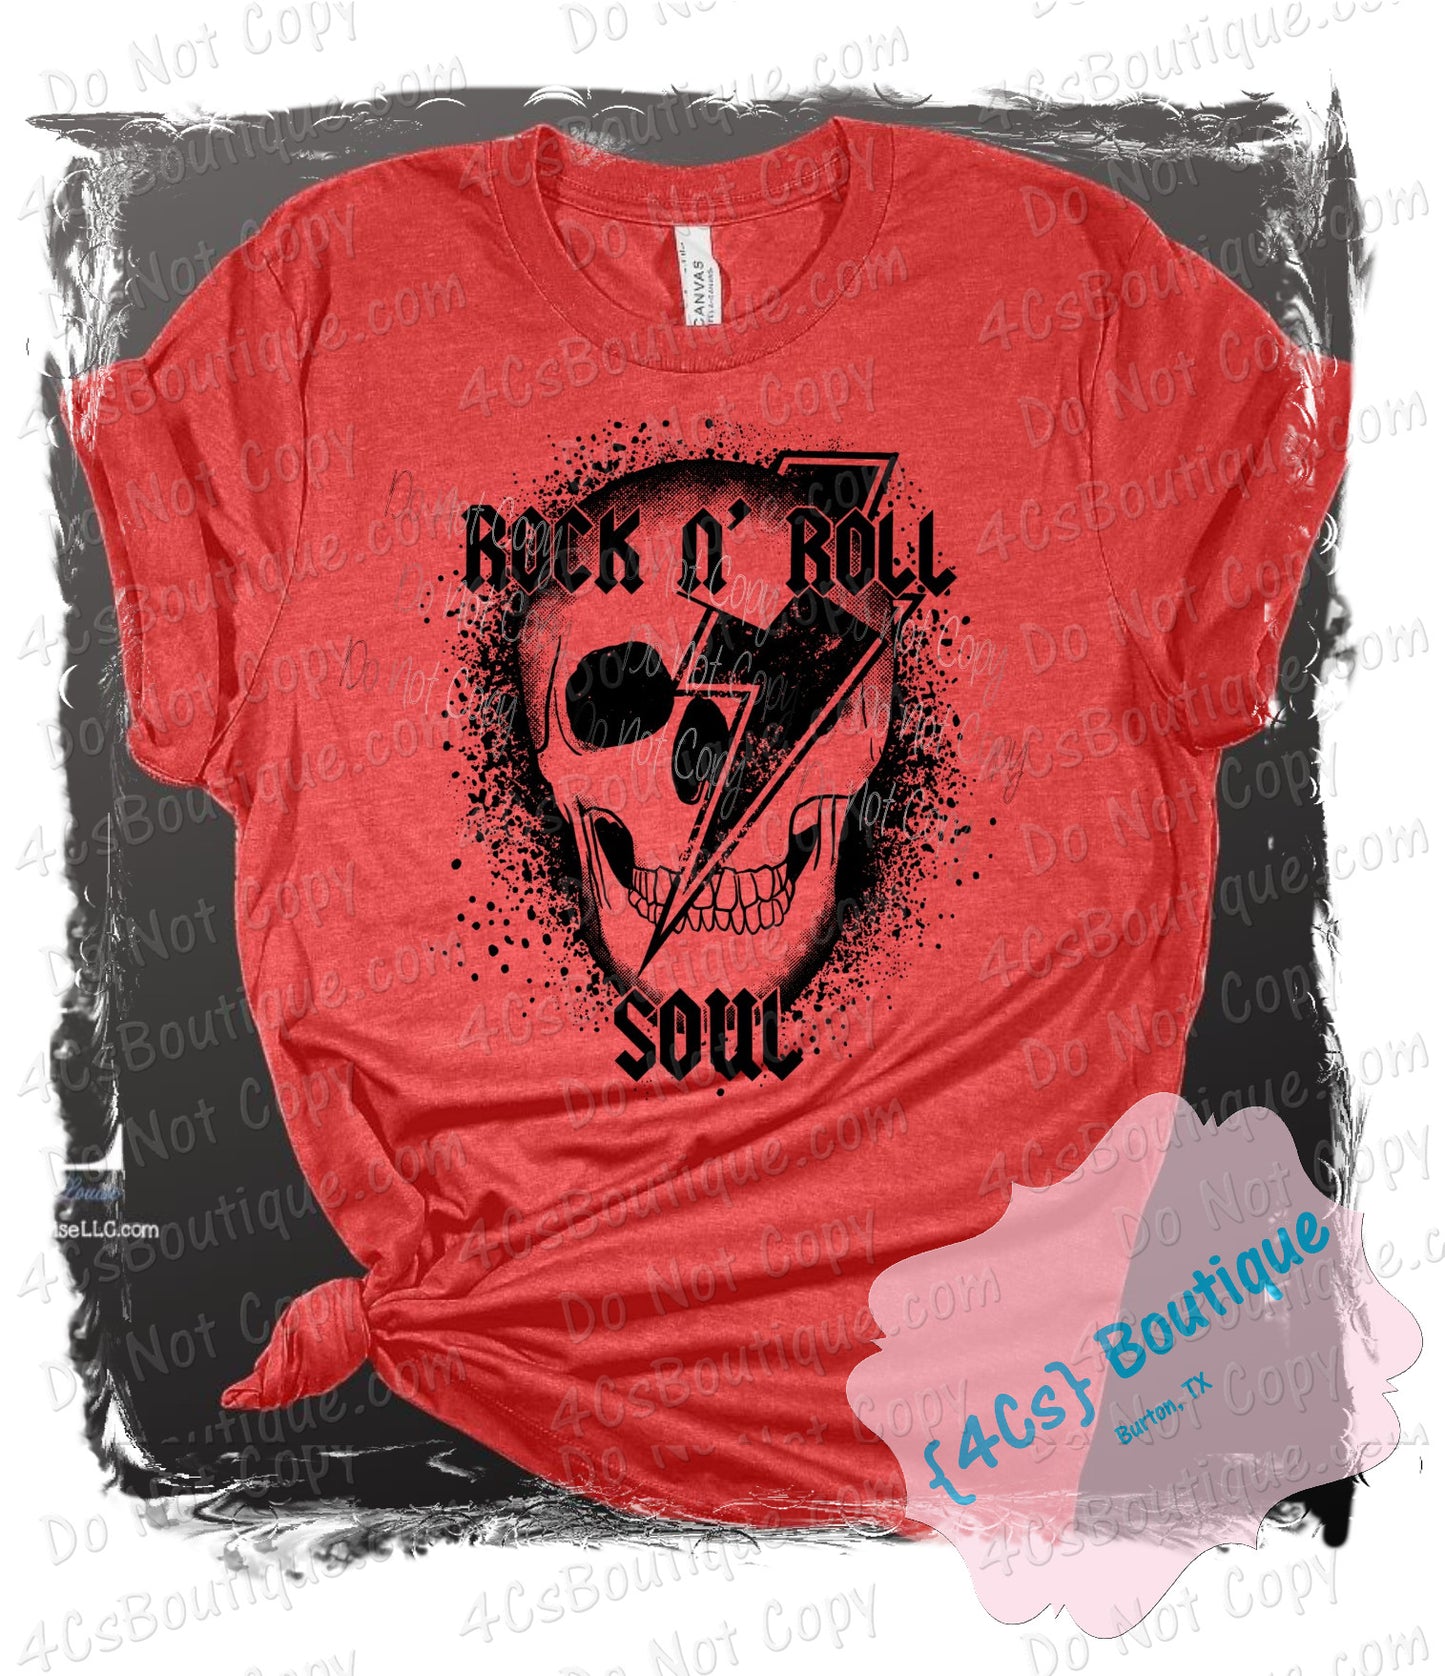 Rock N' Roll Soul Shirt